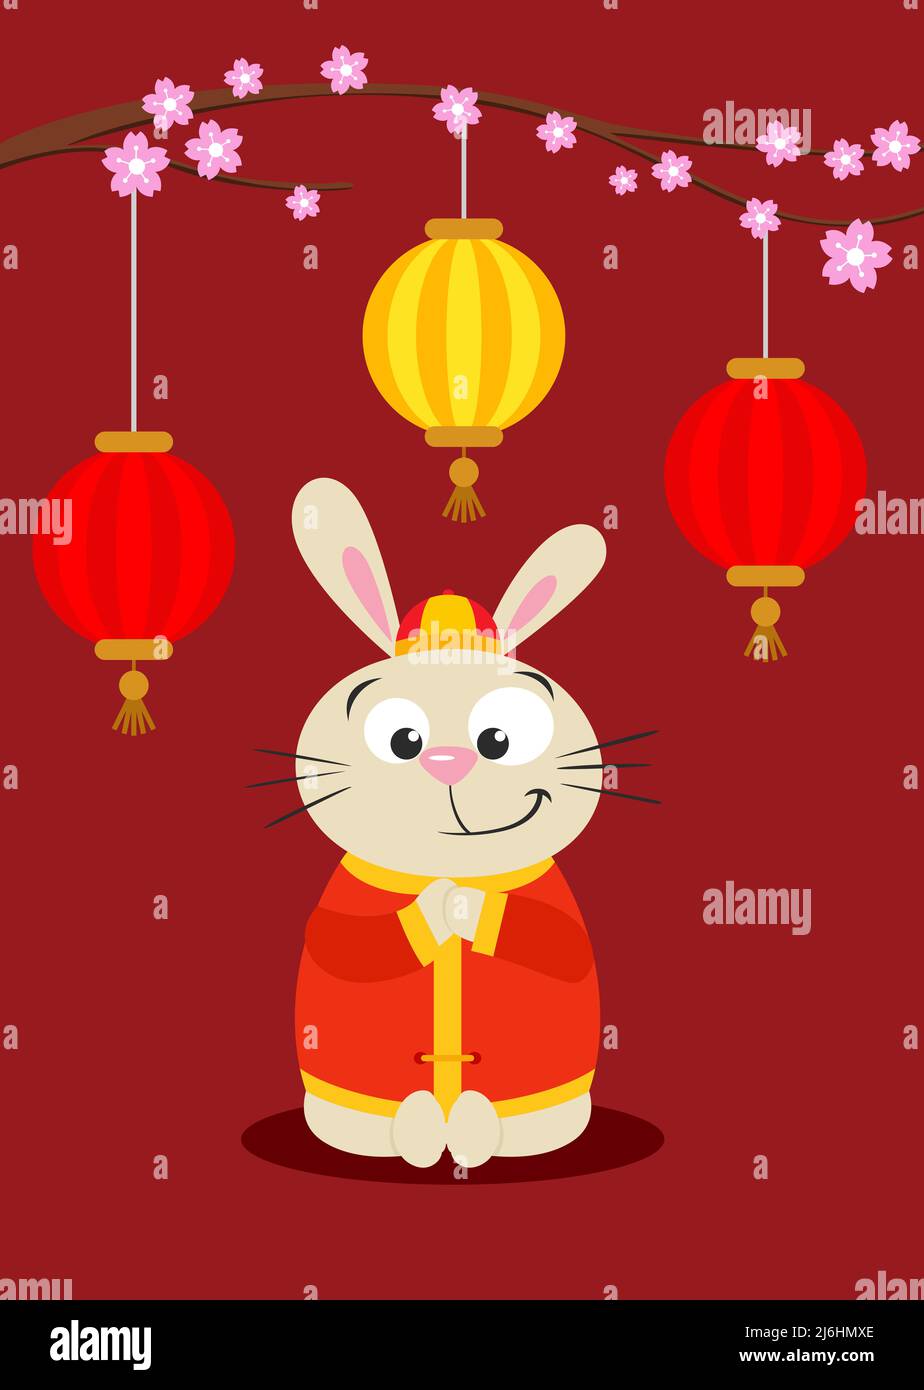 Cute chinese zodiac rabbit happy new year 2023 Stock Photo - Alamy